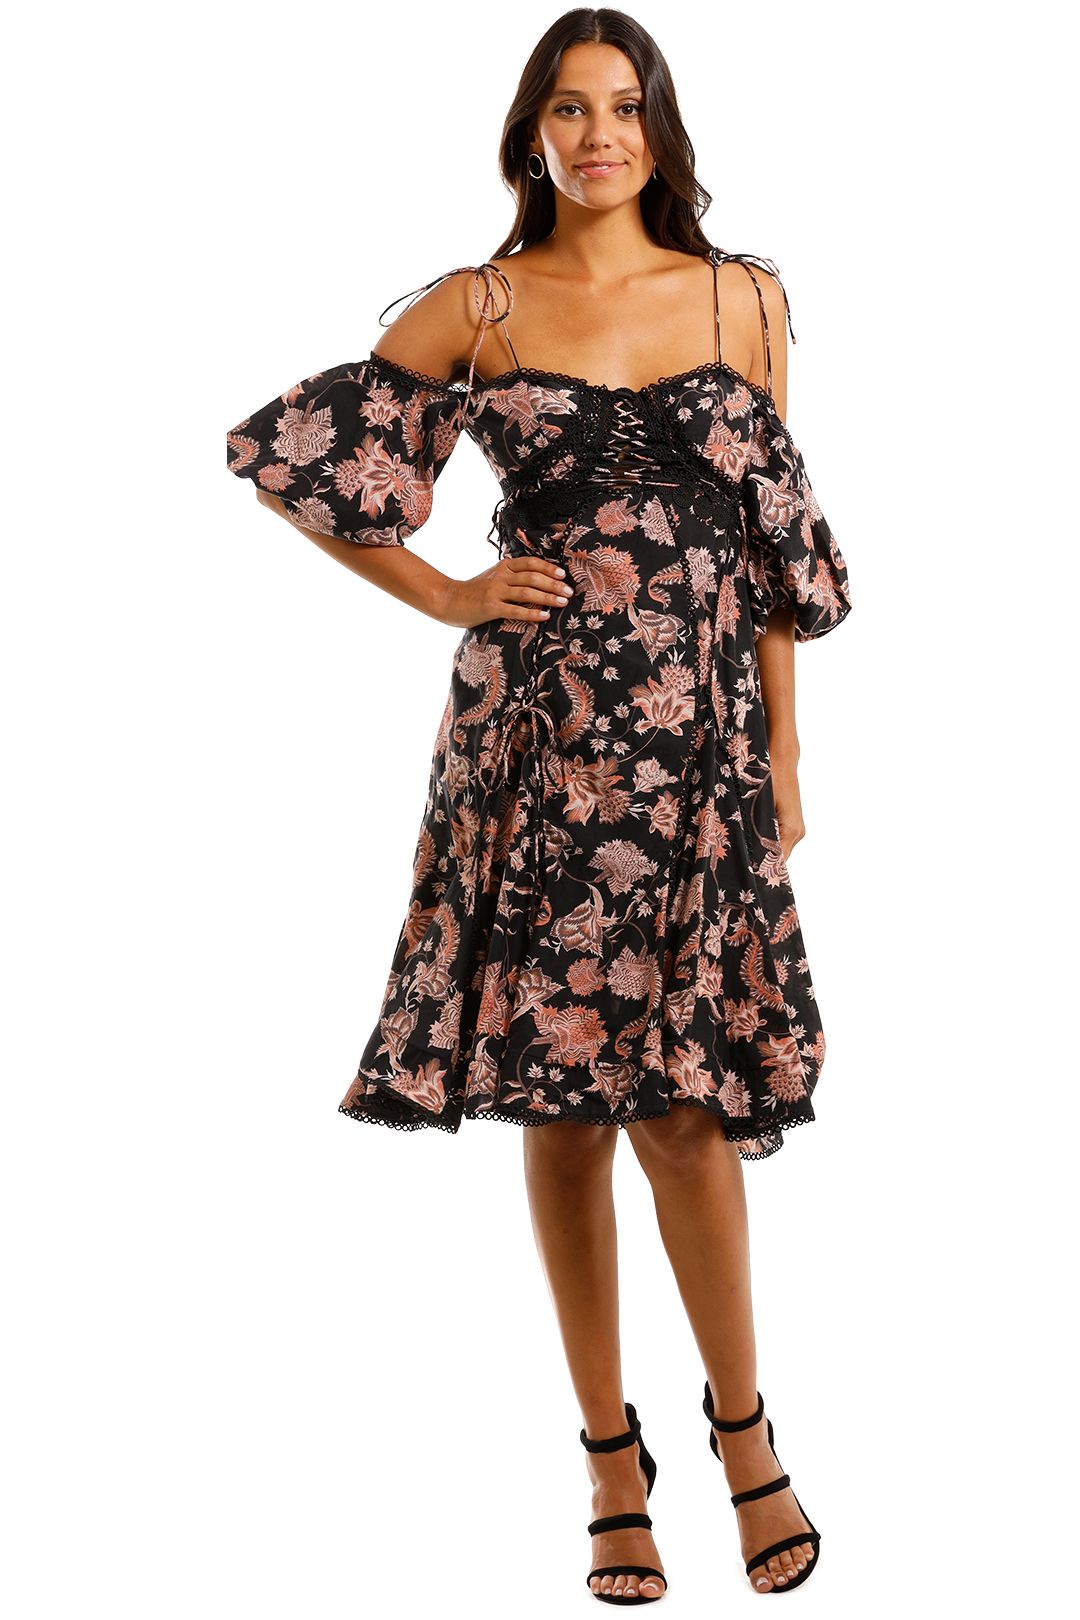 Hire Beautiful Thurley Dresses Online | GlamCorner